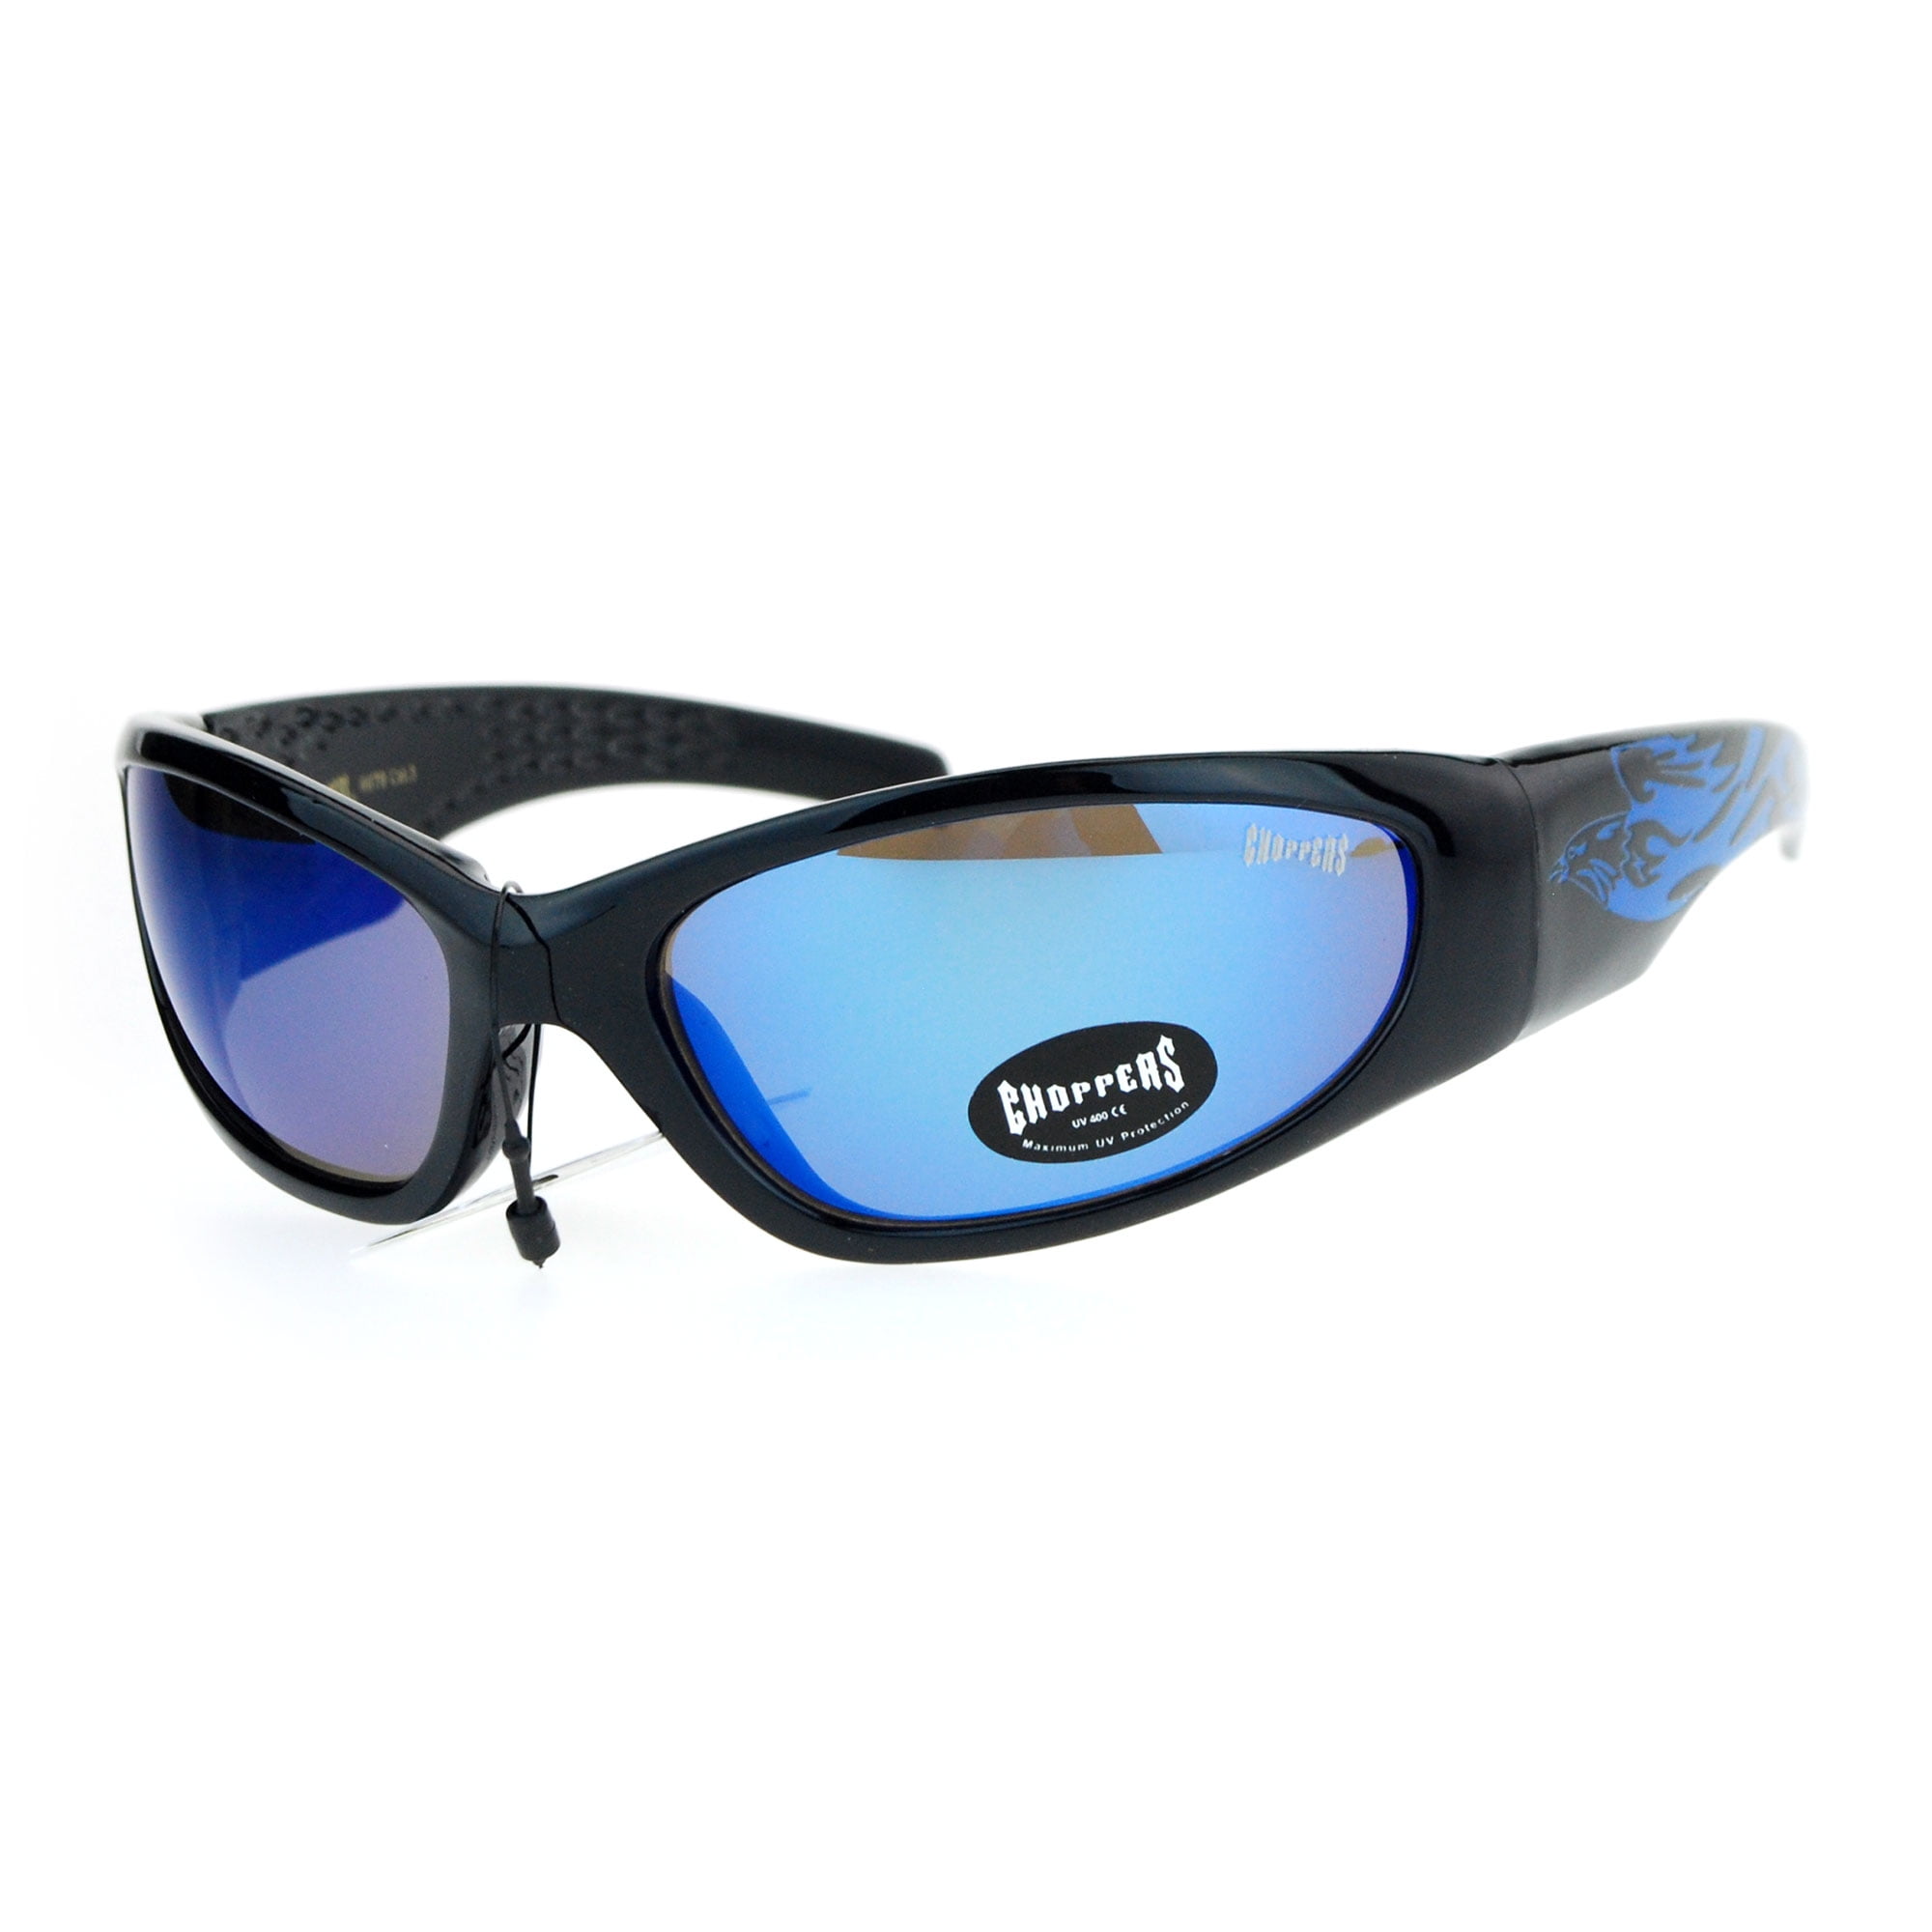 Mens Choppers Sunglasses Flaming Eagle Design Oval Wrap Frame UV 400 